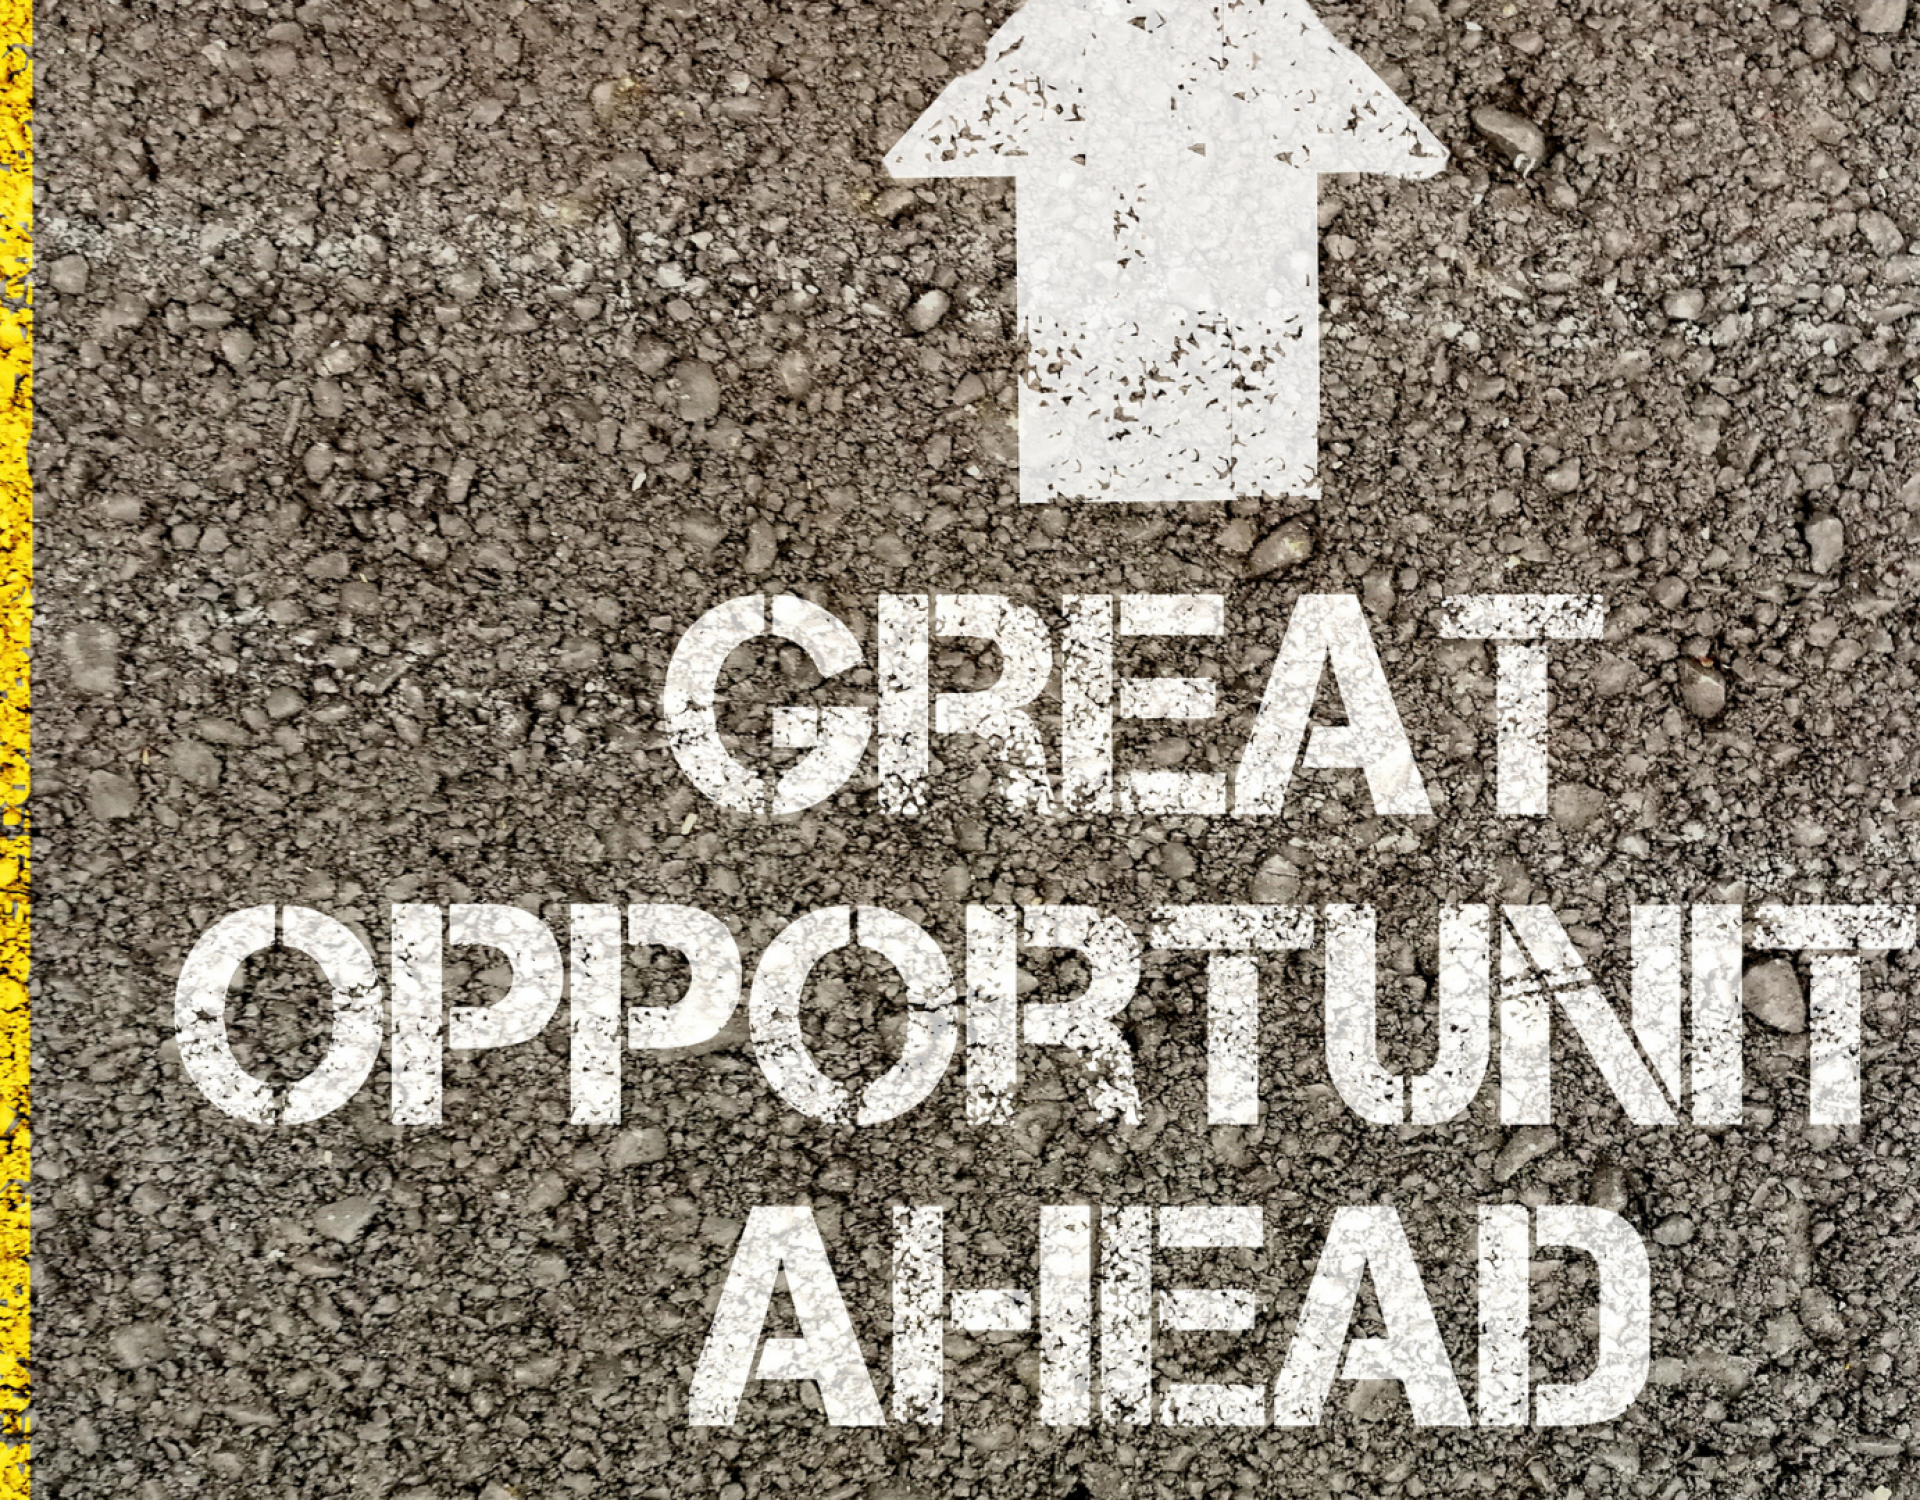 Great-Opportunity-Ahead-Slide-1920x1080